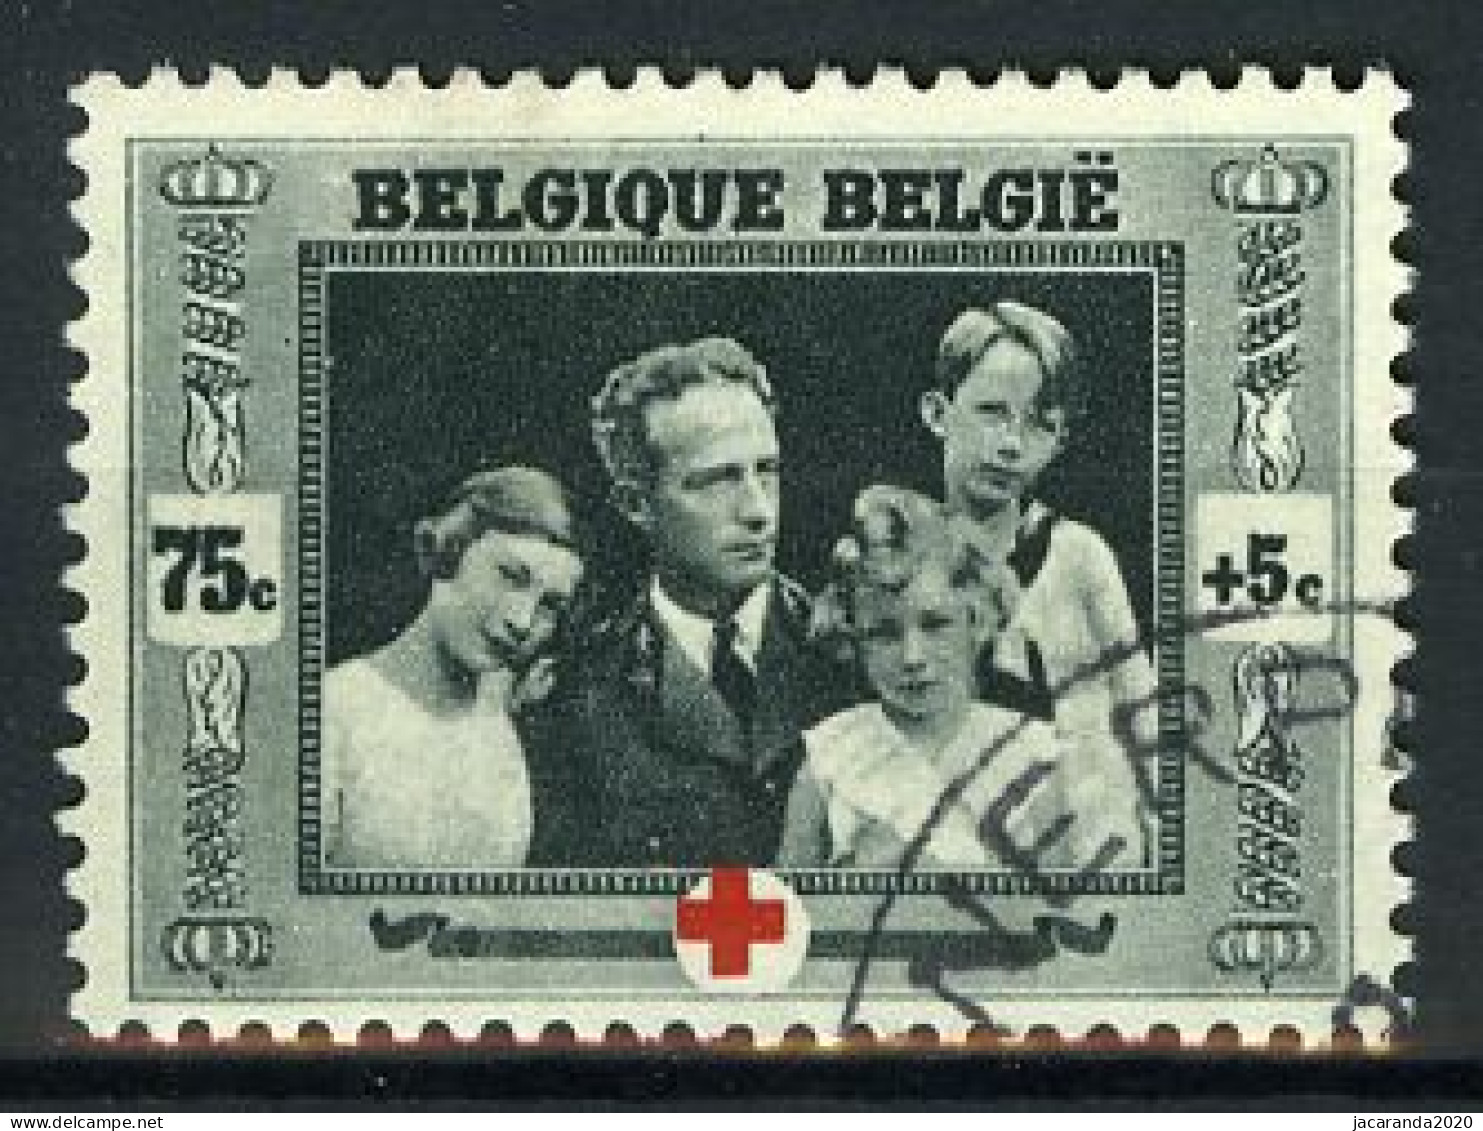 België 499 - Rode Kruis - Croix-Rouge - Koning Leopold III En Kinderen - Roi Léopold III - Gestempeld - Oblitéré - Used - Usati